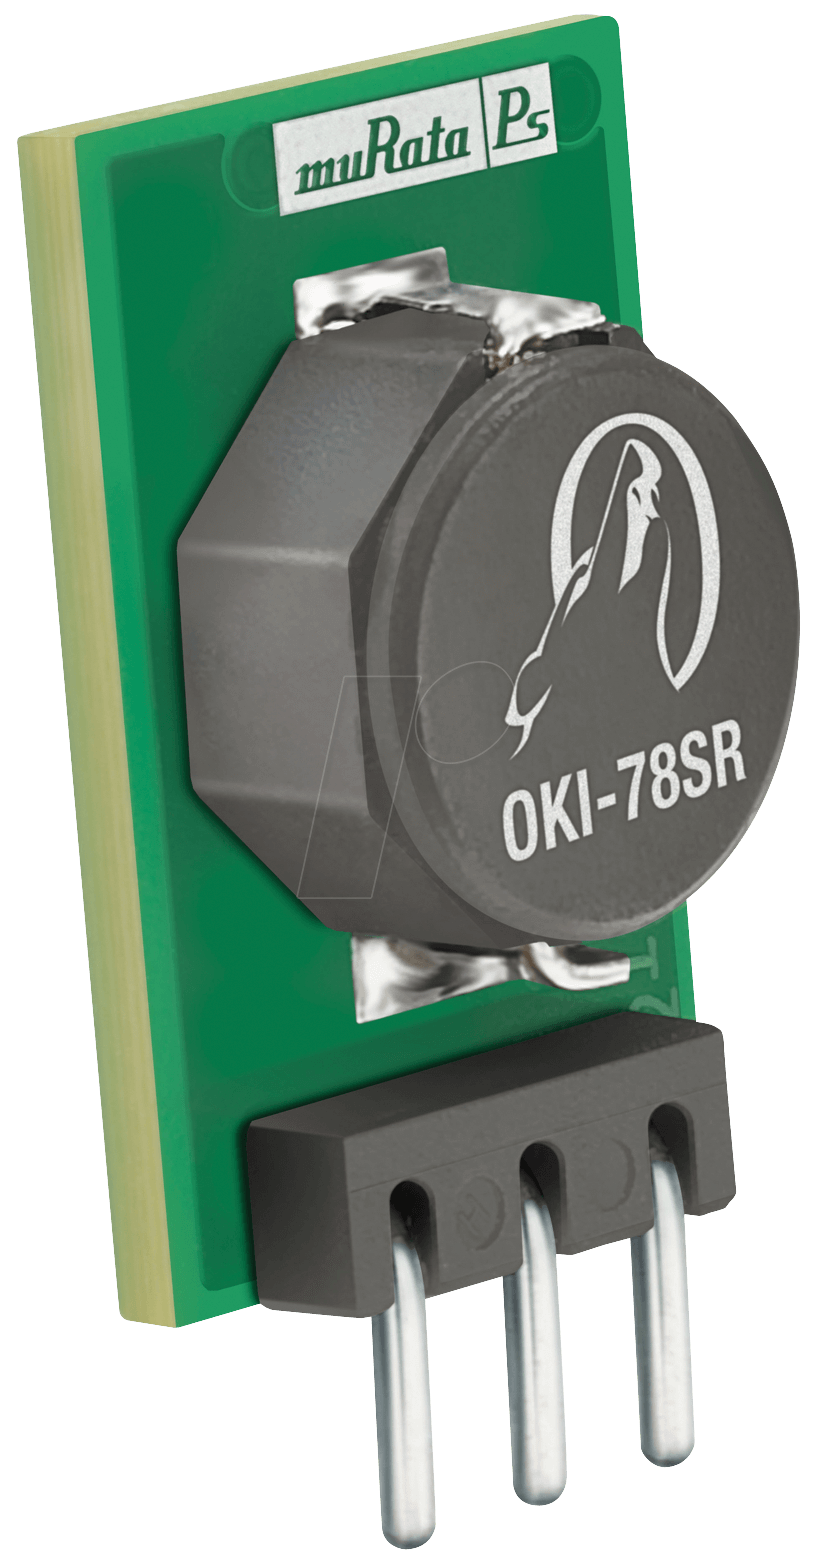 OKI515W36C - DC/DC-Wandler OKI 78SR, 8 W, 5 V, 1500 mA, SIL, Single von MURATA POWER SOLUTIONS